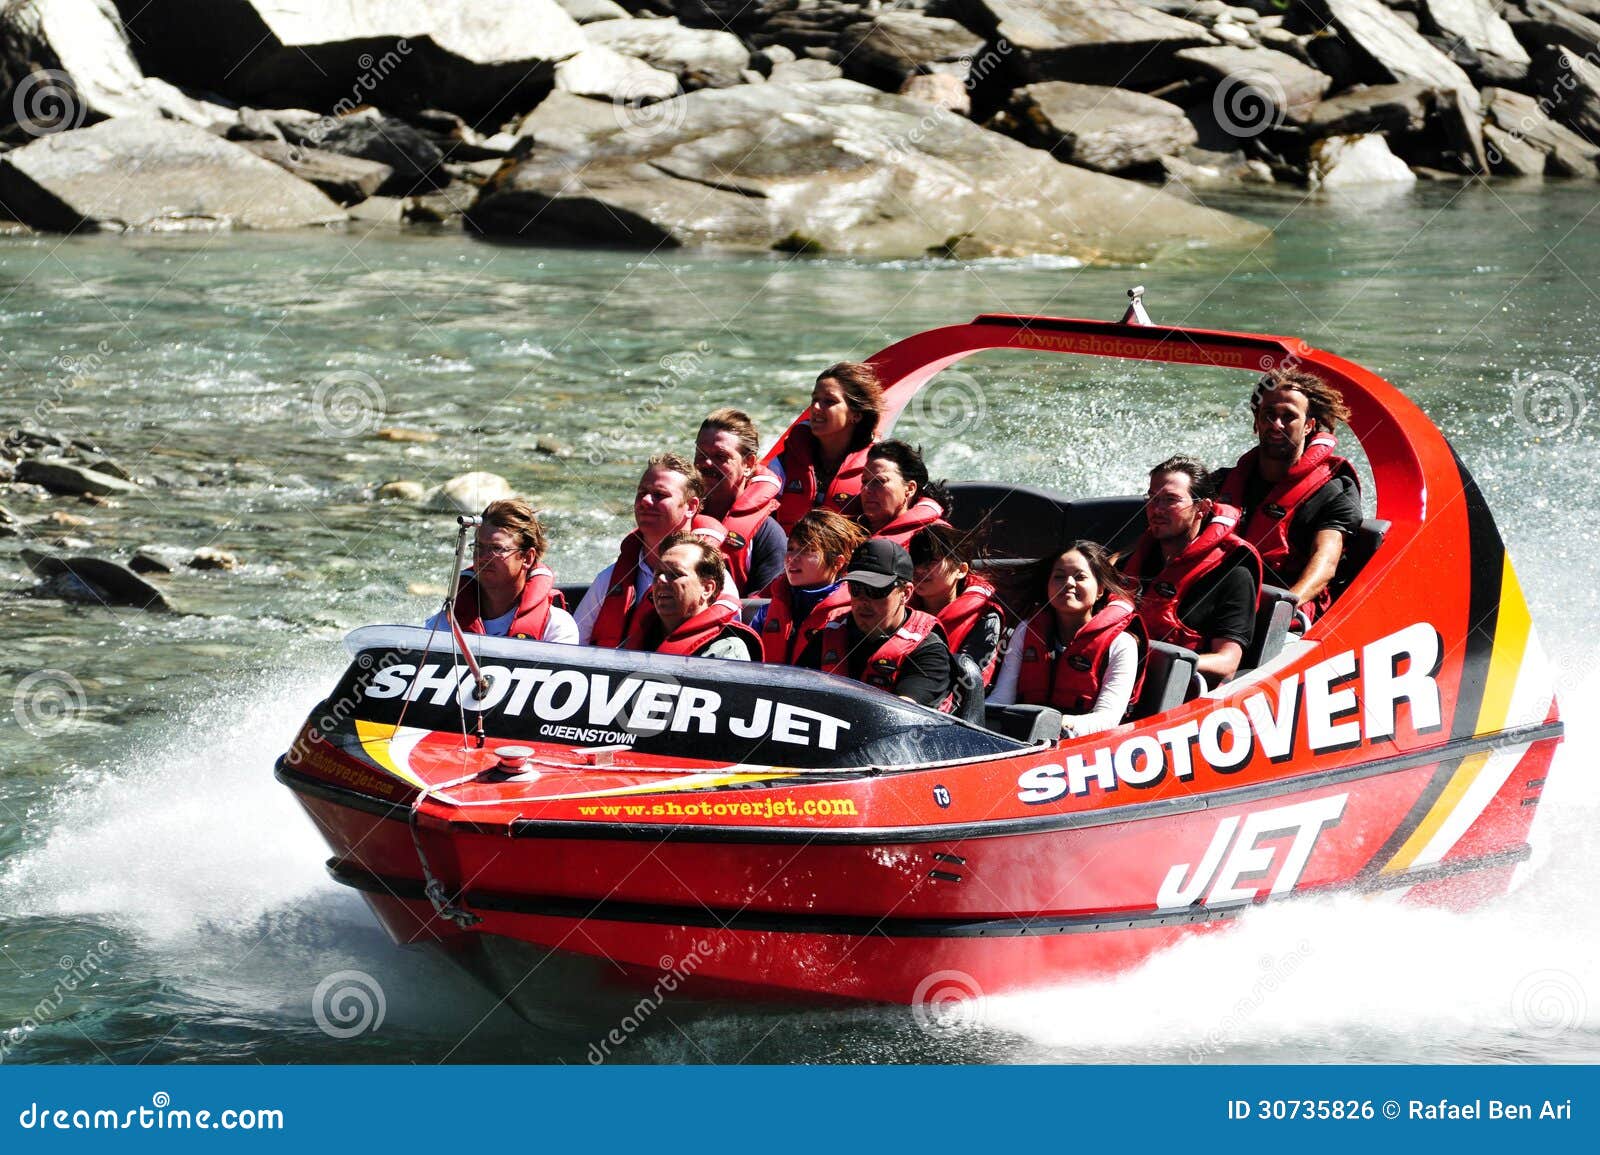 Jet Boat In Queenstown New Zealand Editorial Photo - Image ...